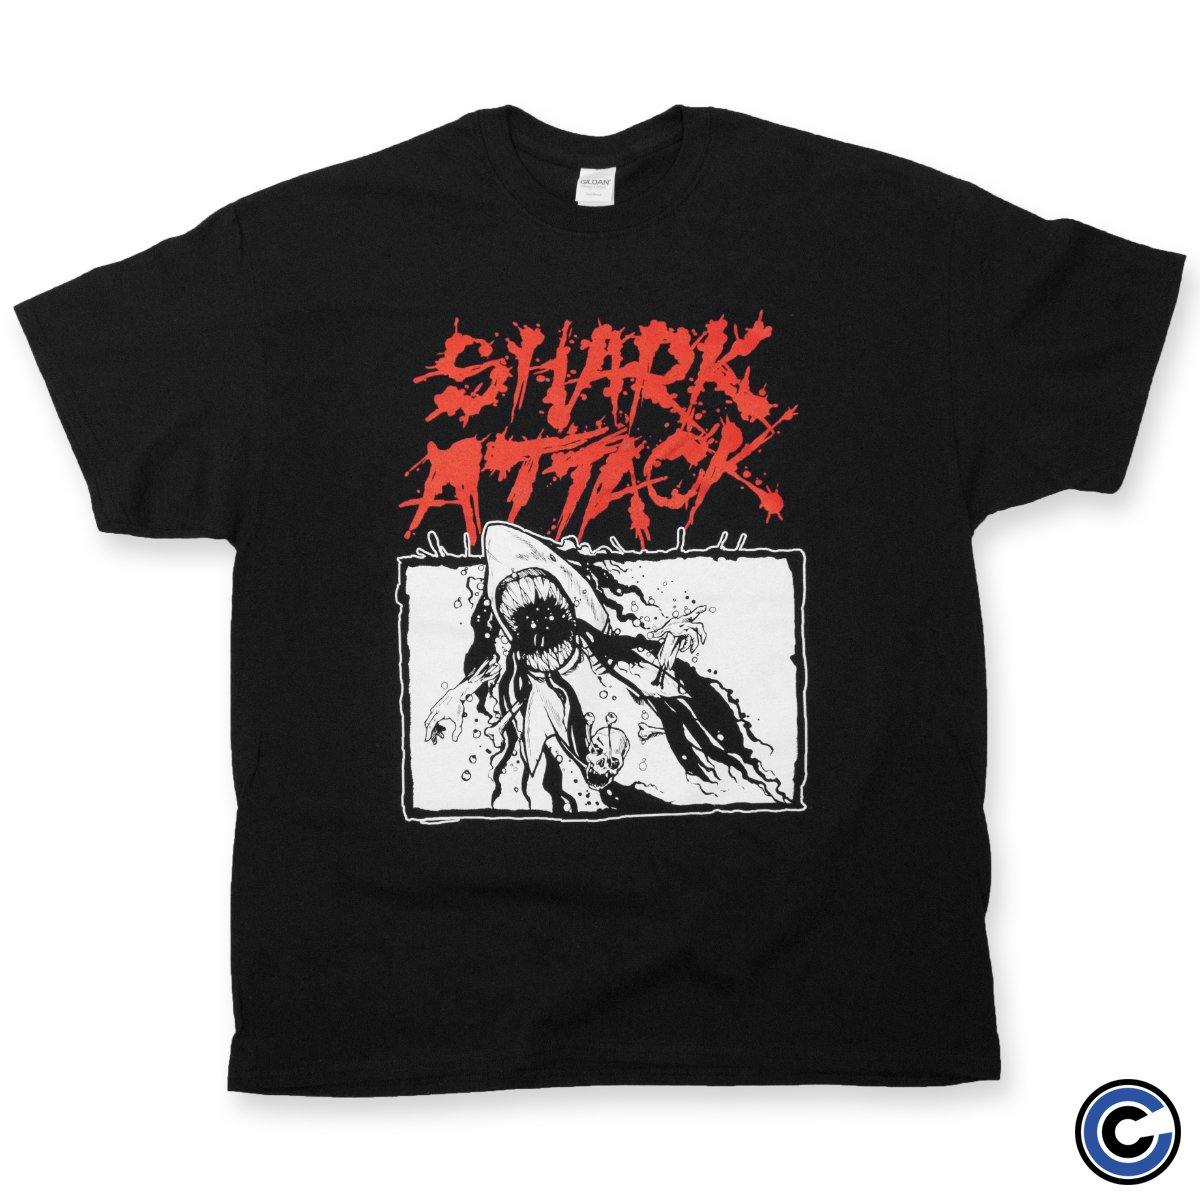 Buy – Shark Attack "Blood" Shirt – Band & Music Merch – Cold Cuts Merch